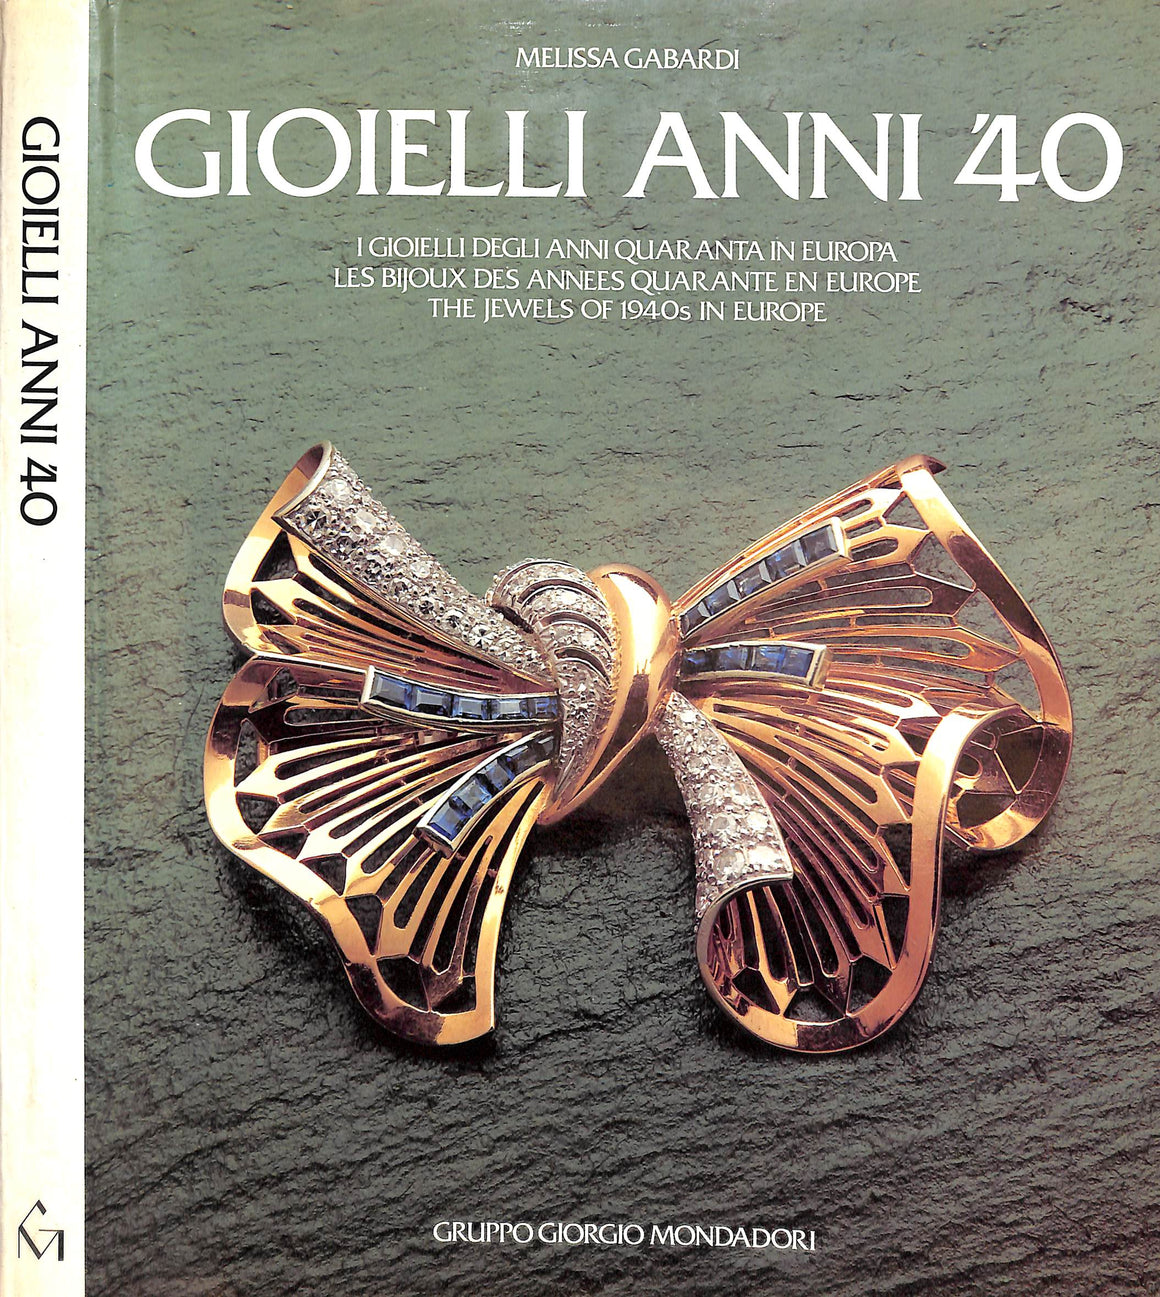 "Gioielli Anni '40: The Jewels Of 1940s In Europe" 1982 GABARDI, Melissa